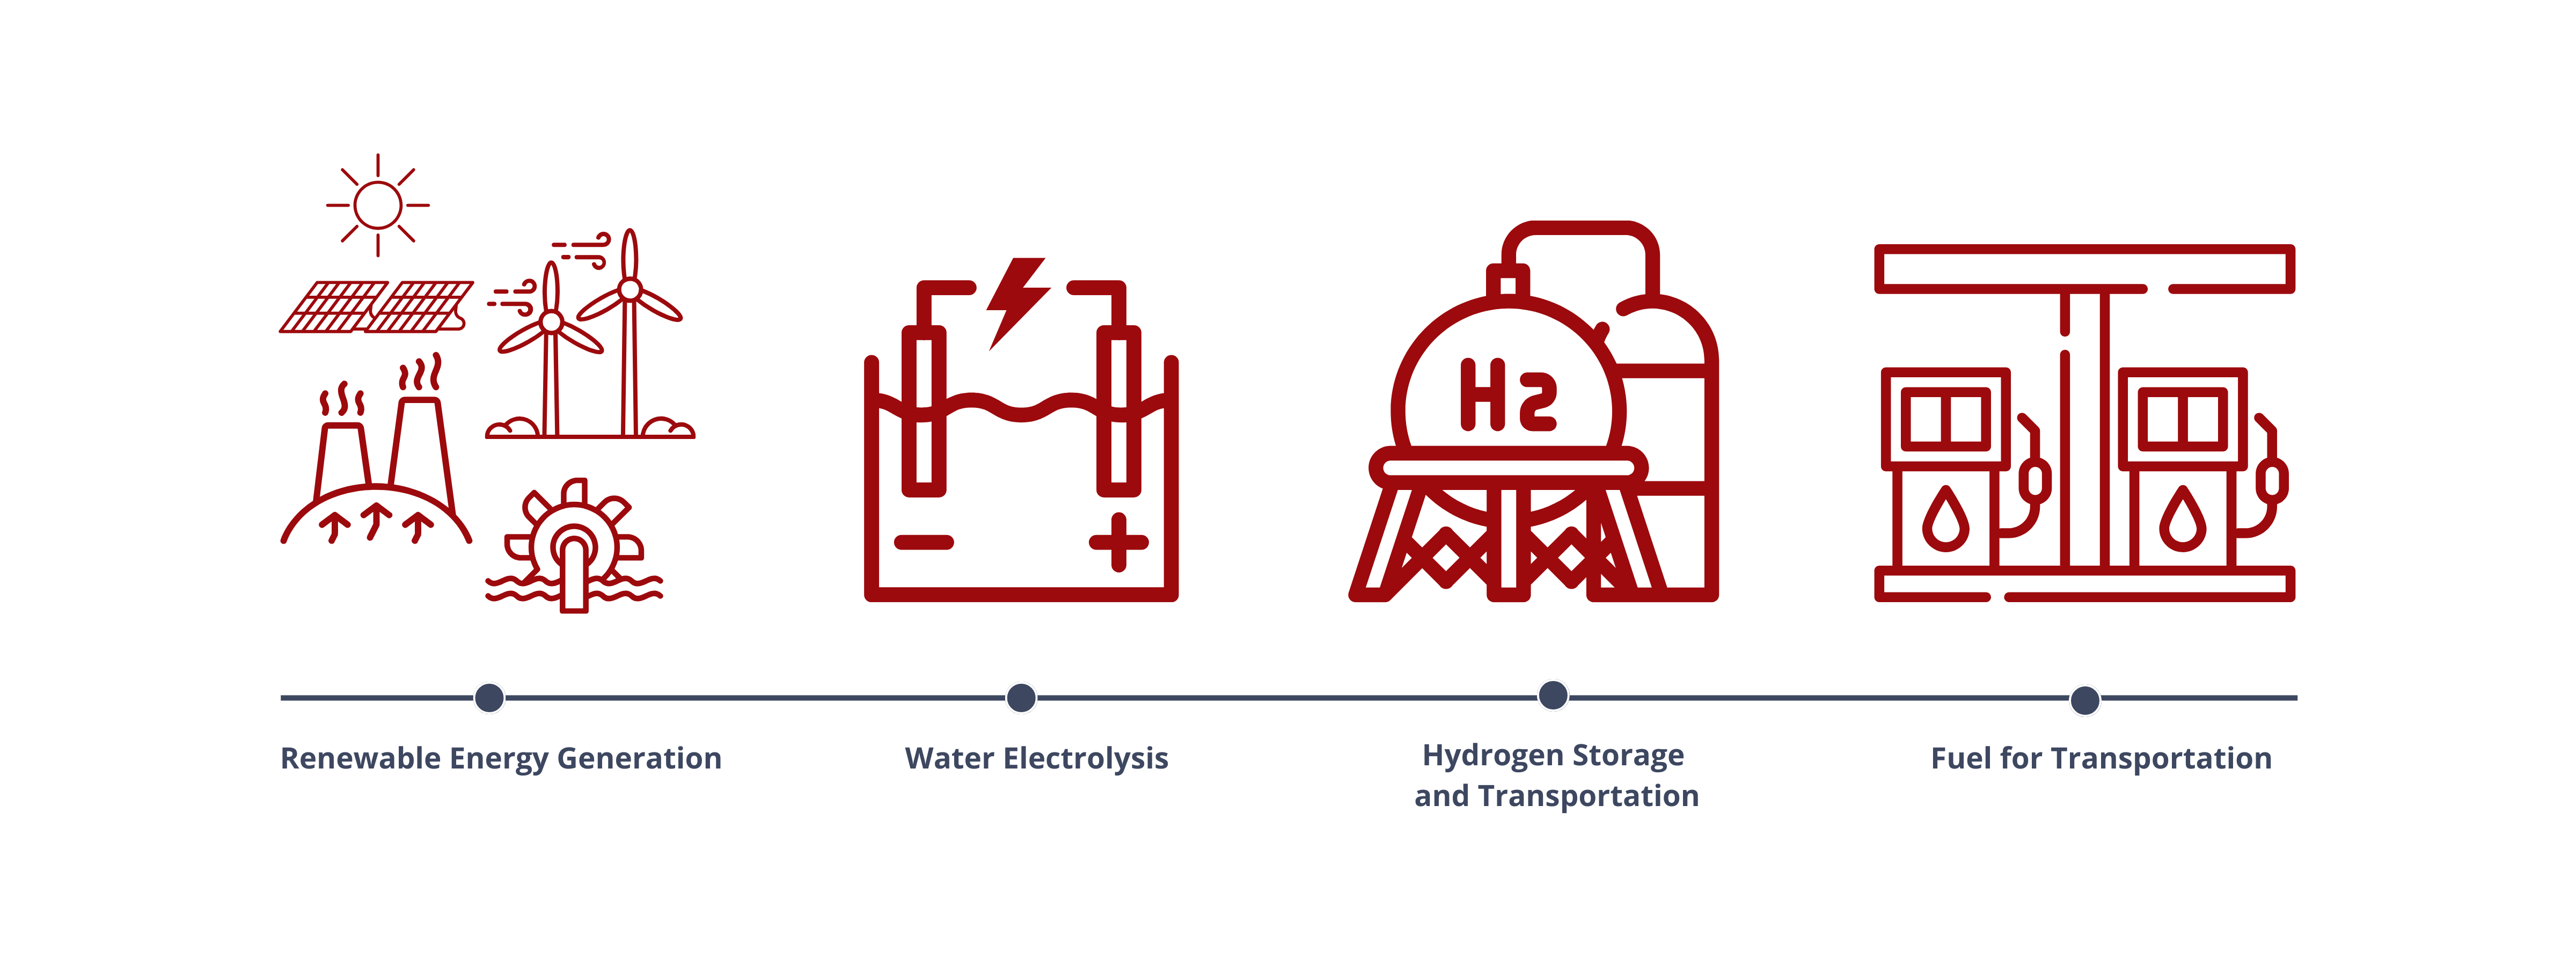 Hydrogen well to wheel